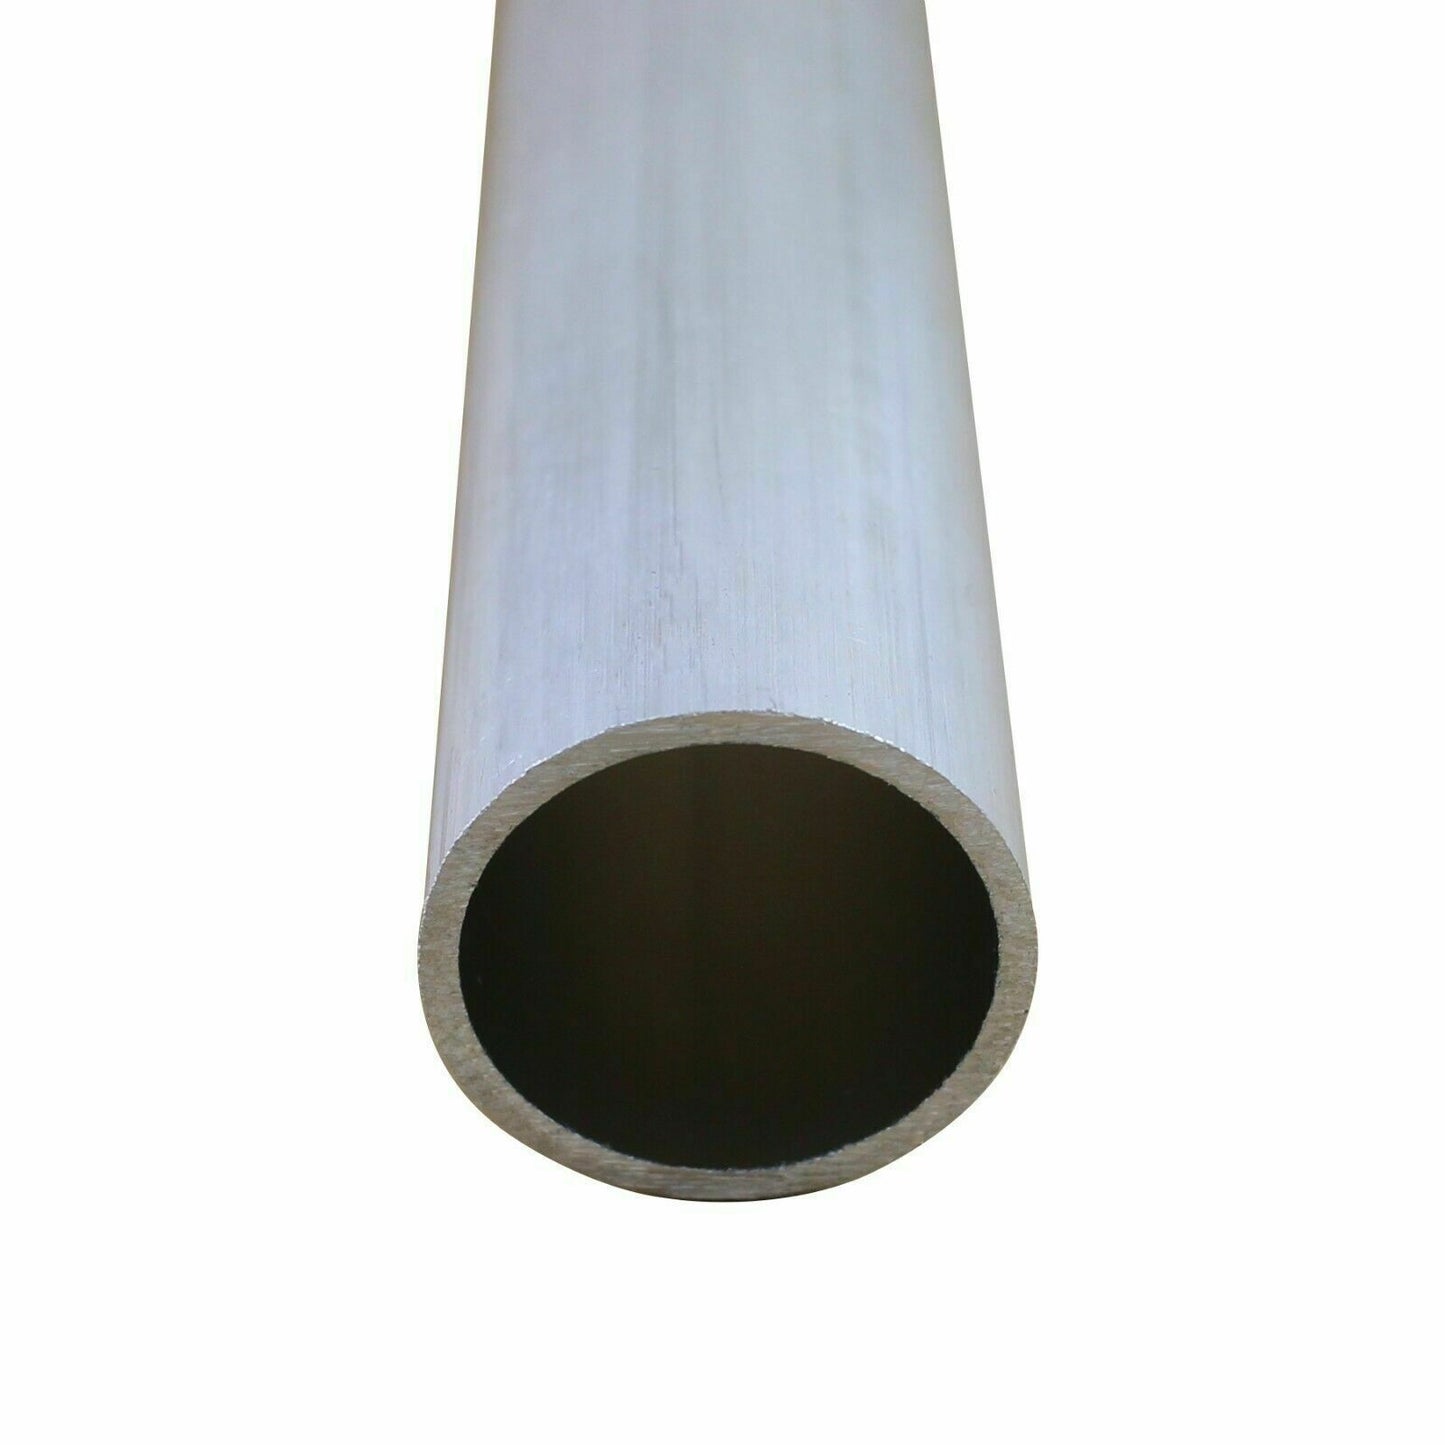 OD 24 mm ID 16 mm 1 pièce Tube rond en aluminium